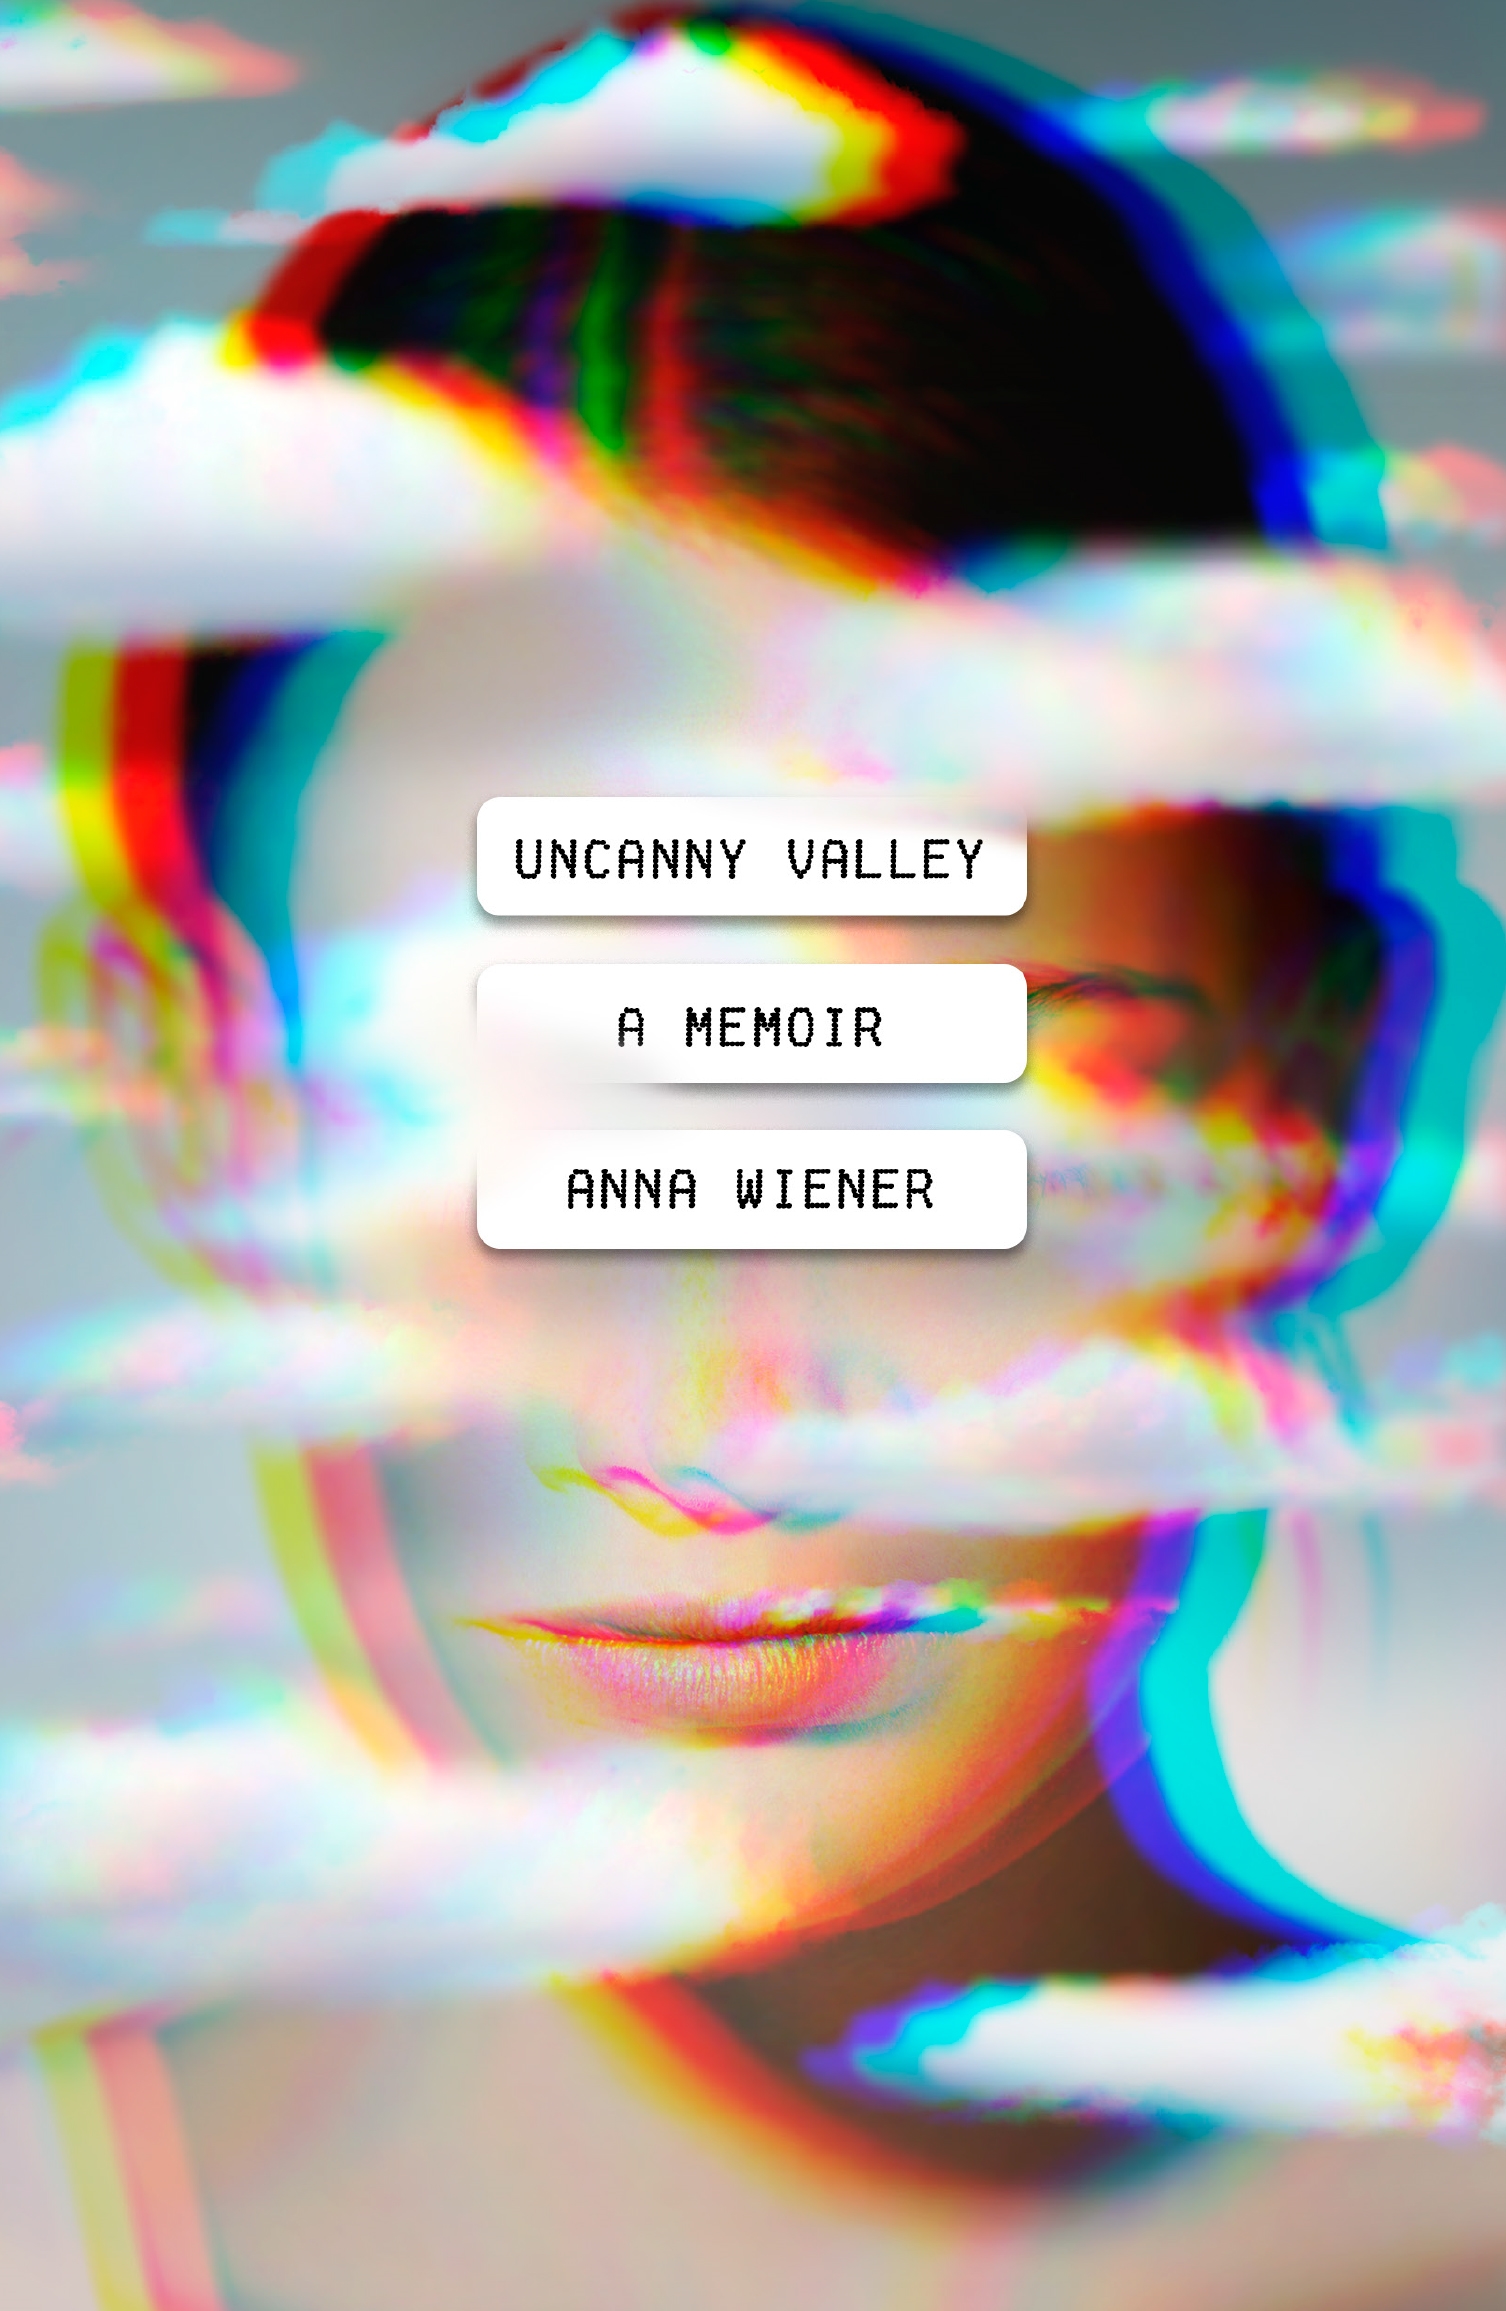 Uncanny valley a memoir cover image